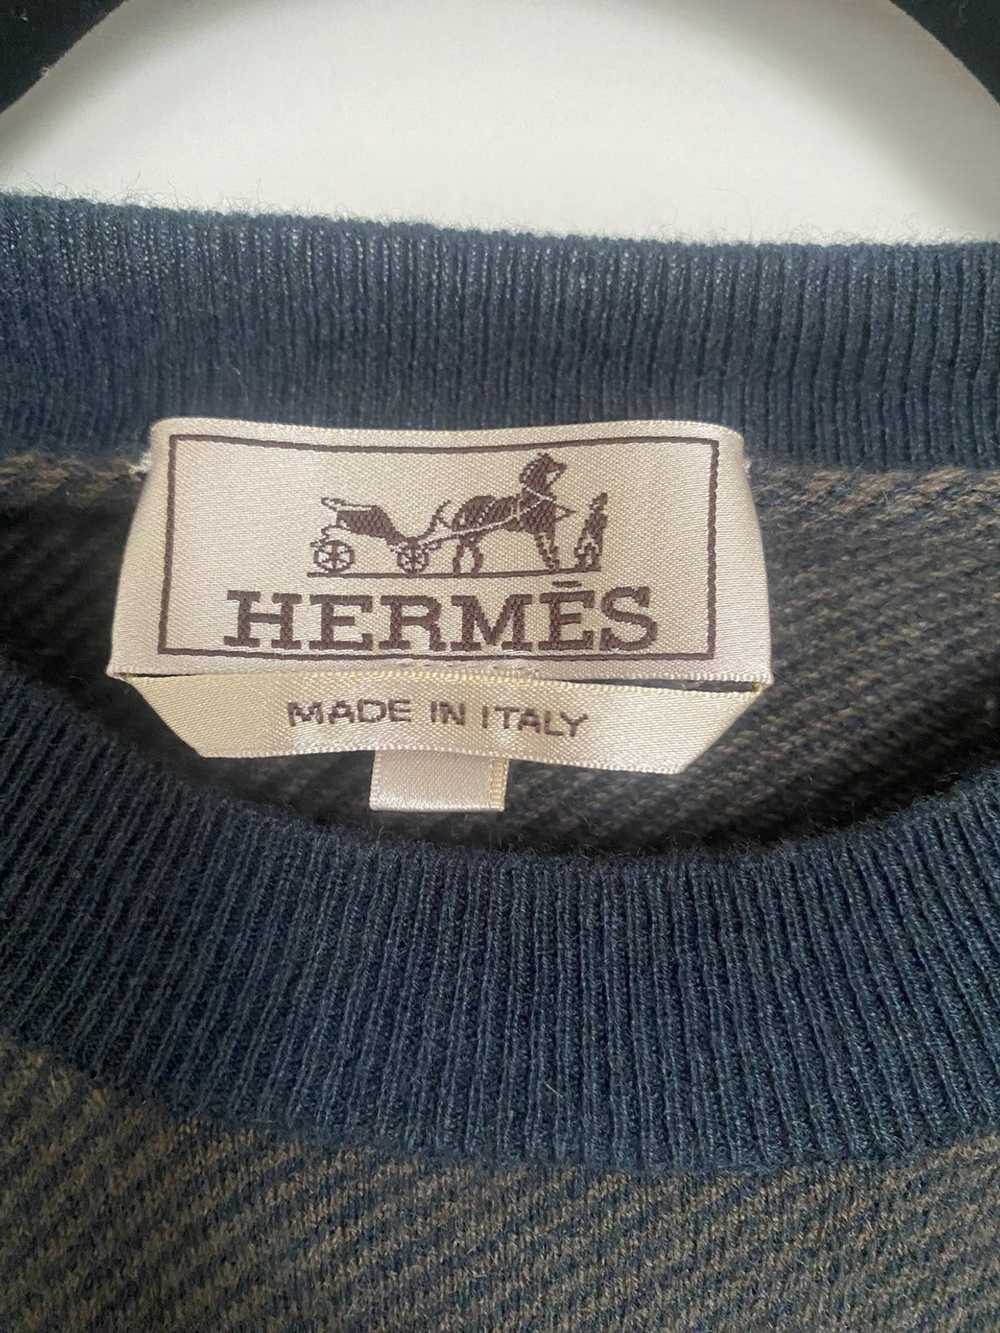 Hermes Hermes knit Cashmere Sweater - image 4